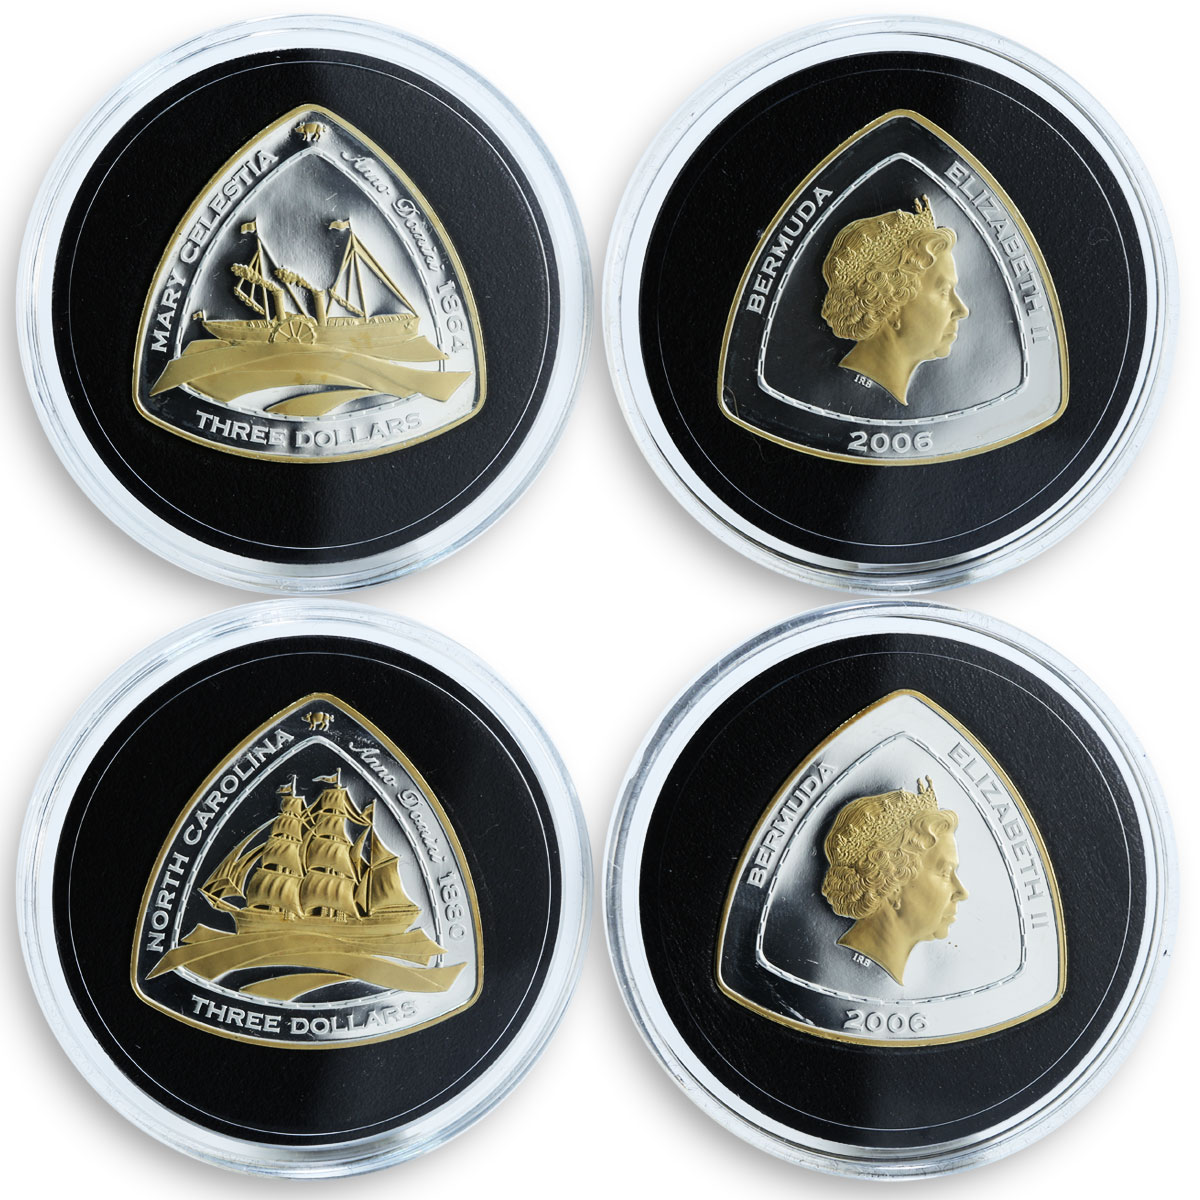 Bermuda $3 Shipwrecks Set of 6 Triangular Silver Proof Gilded coins 2006